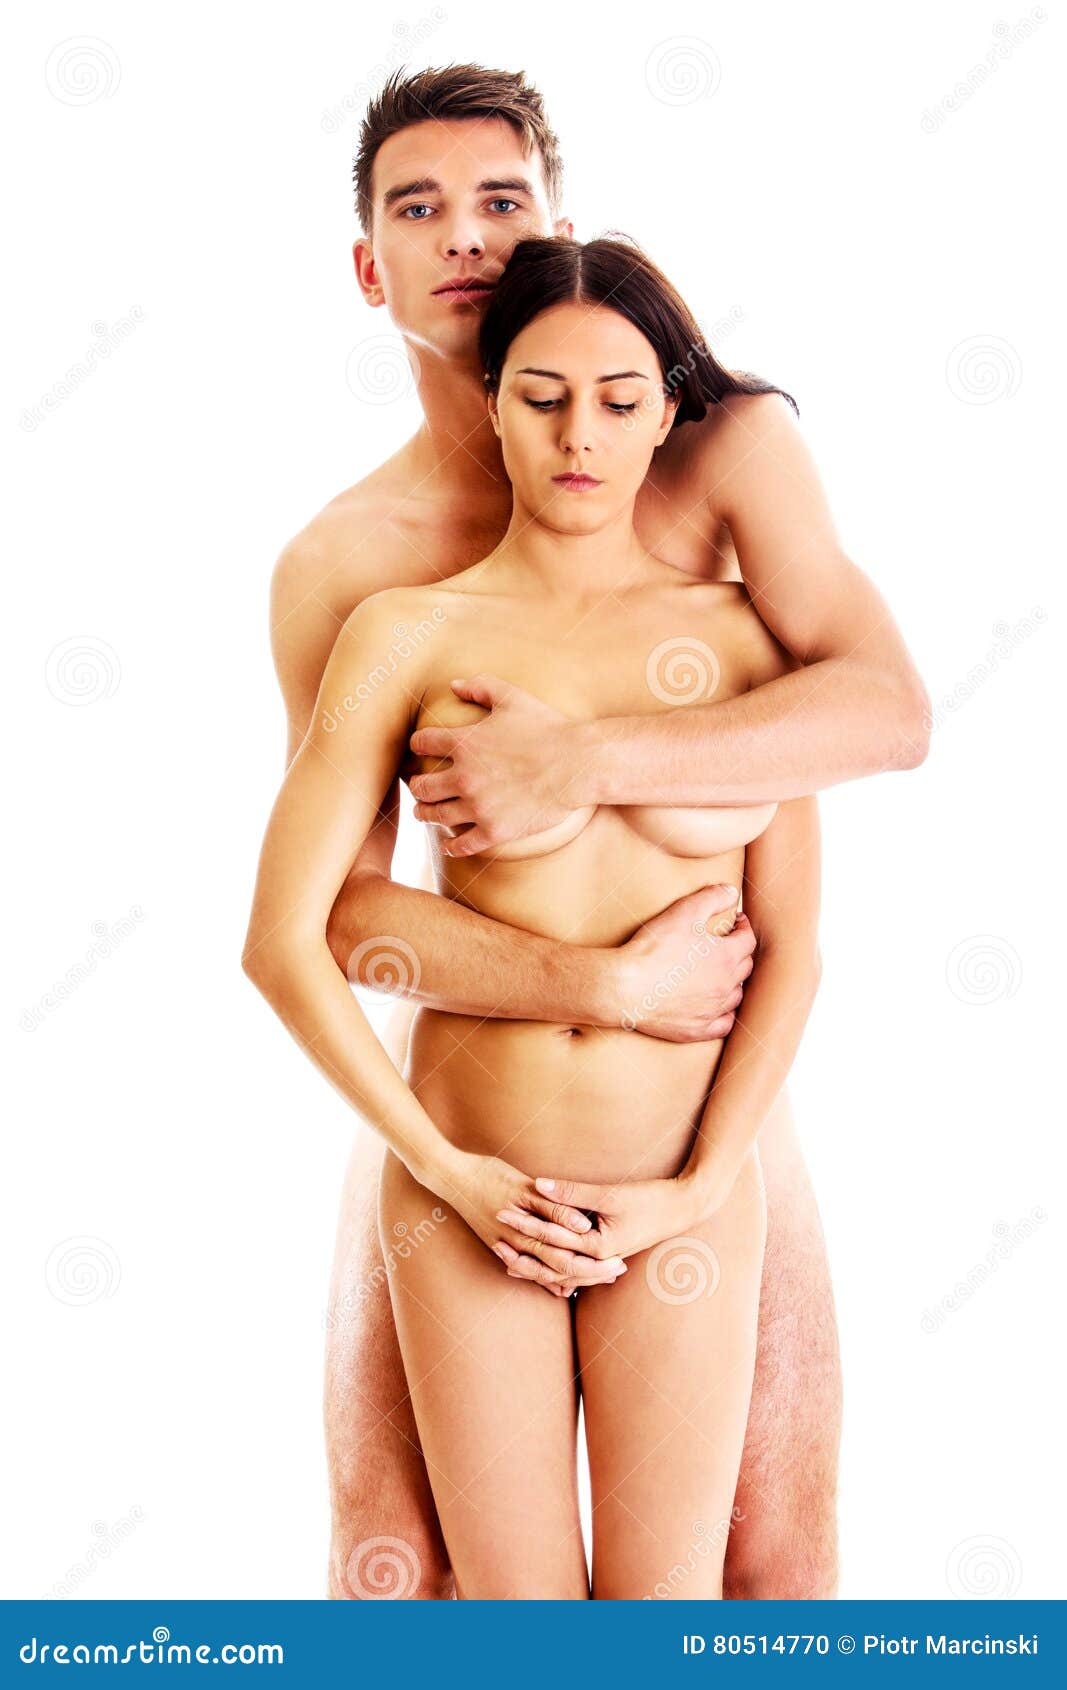 Woman Erotic Photos